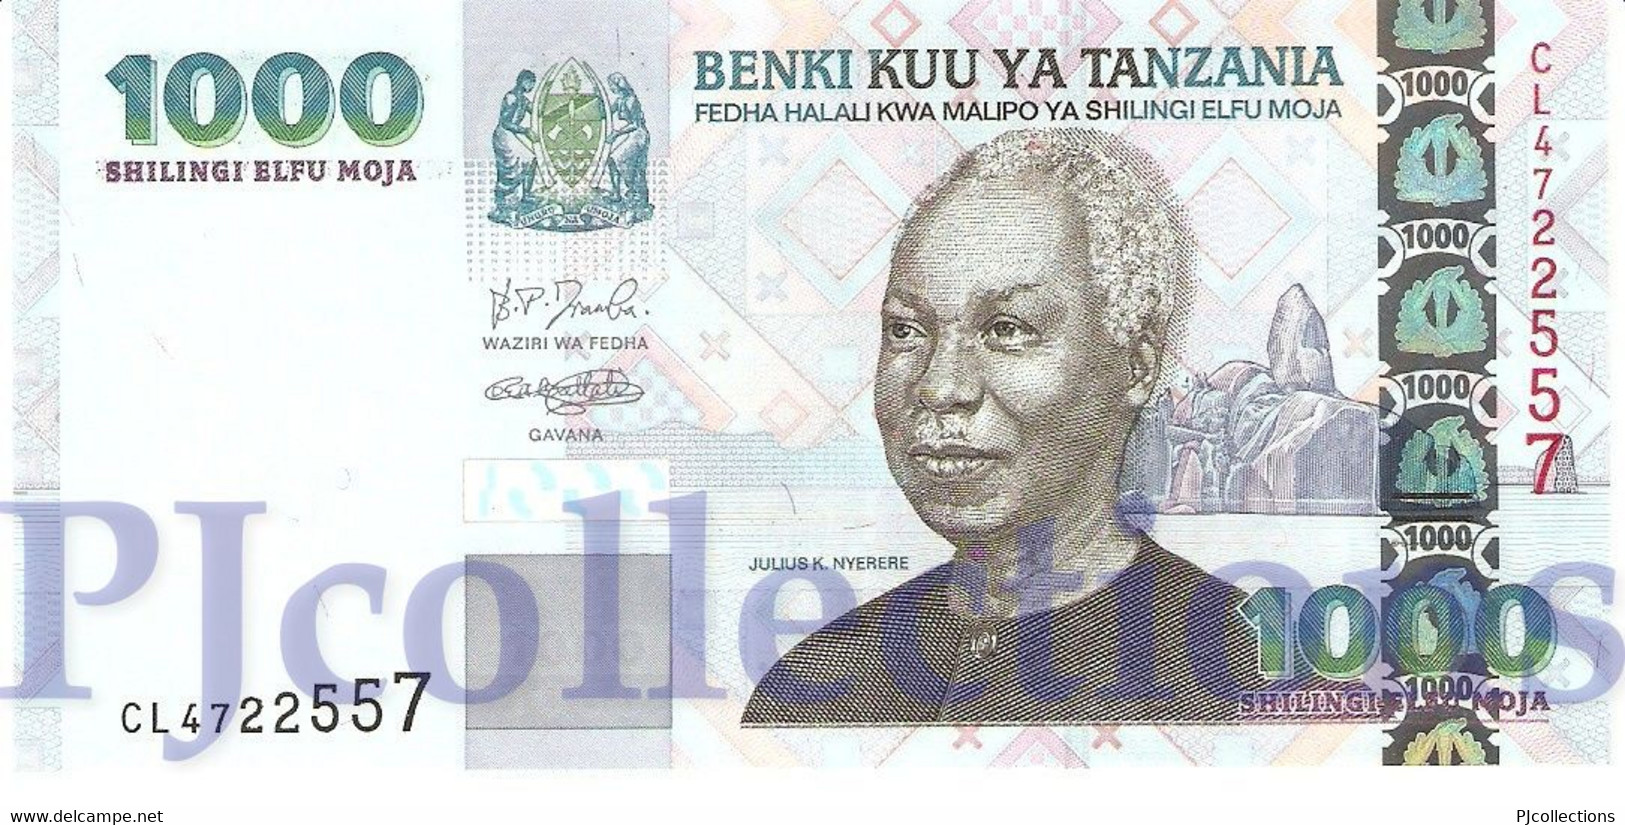 TANZANIA 1000 SHILINGI 2006 PICK 36b UNC - Tanzania